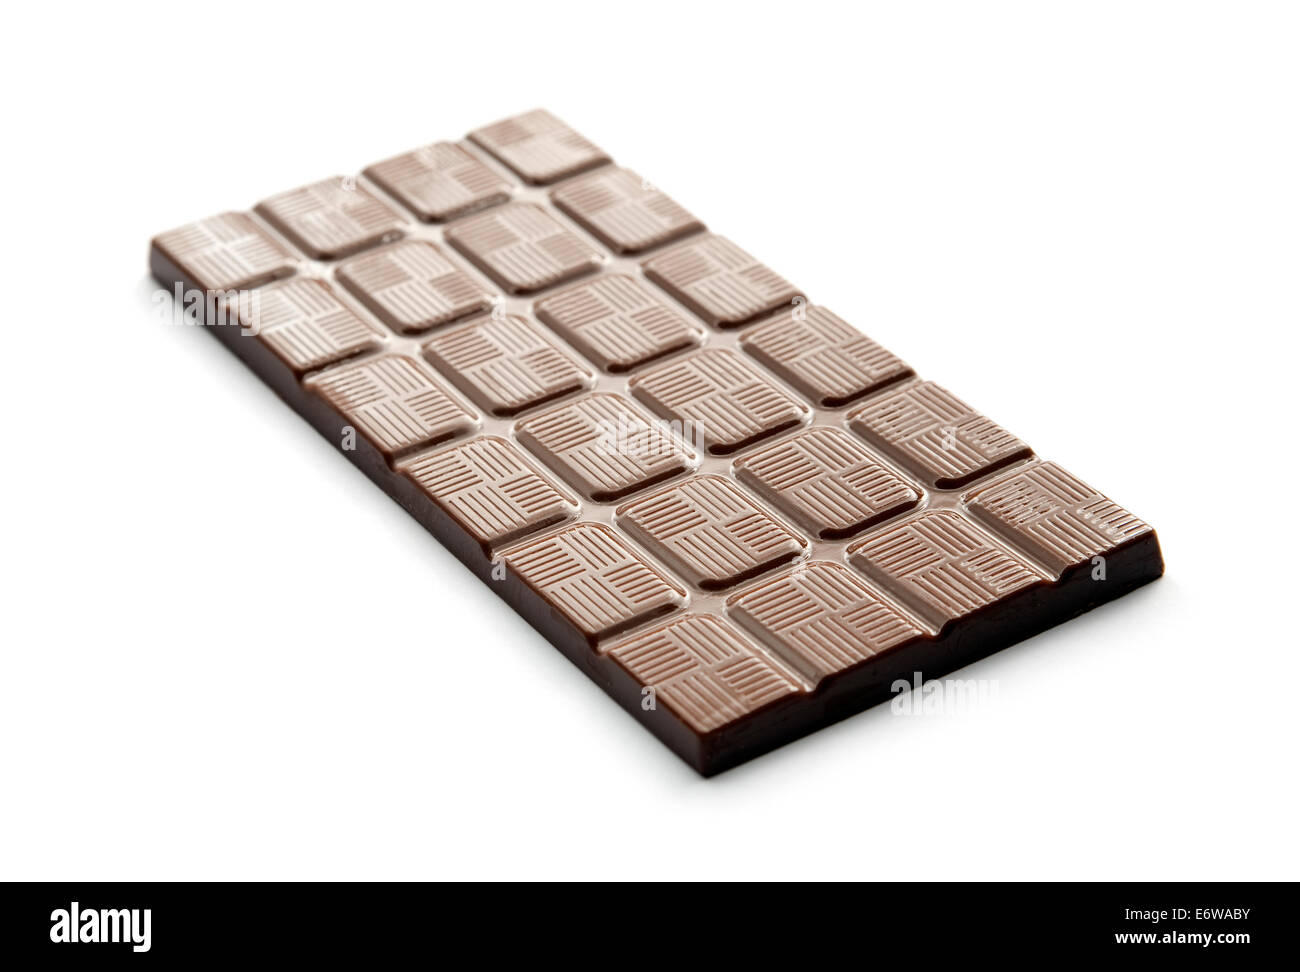 Delicious chocolate bar. Stock Photo